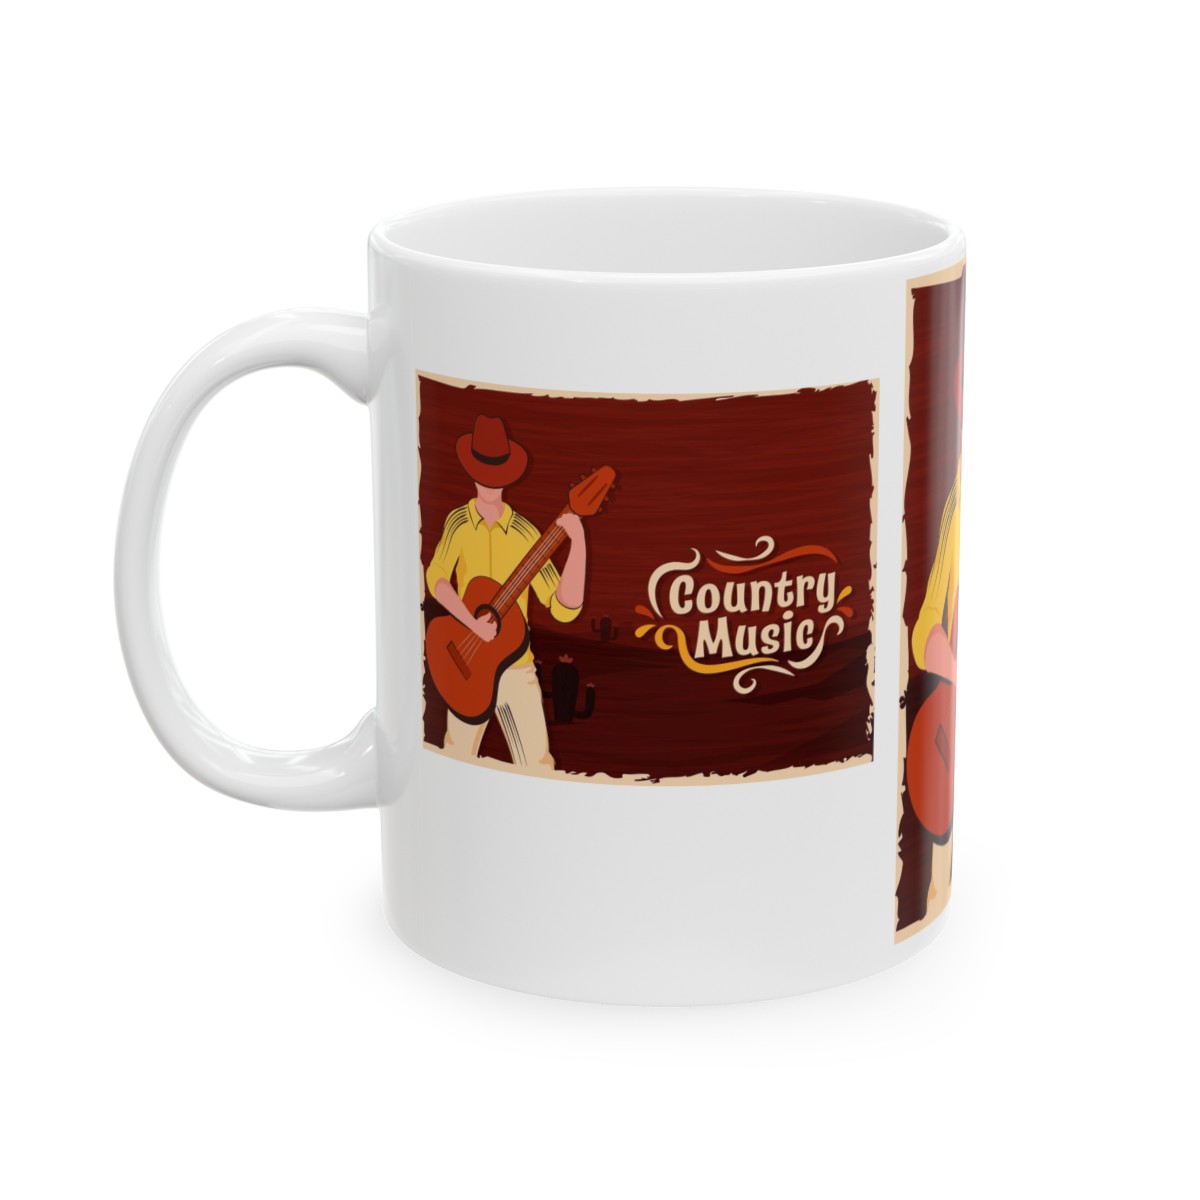 Ceramic Mug Country Music product thumbnail image